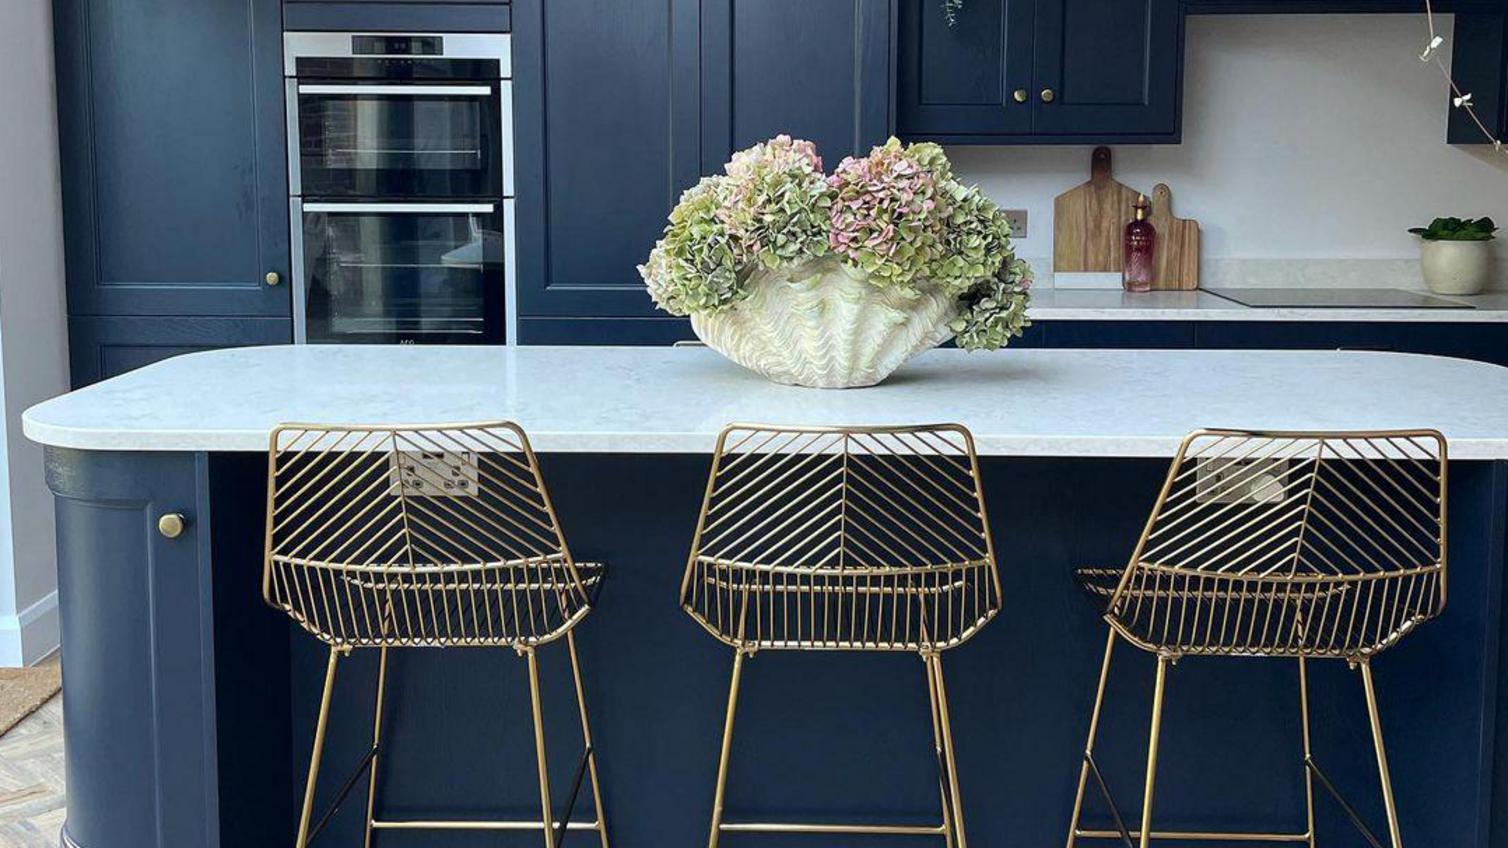 Charcoal shaker kitchen design with an island, quartz worktop, brass knob handles and flowers.